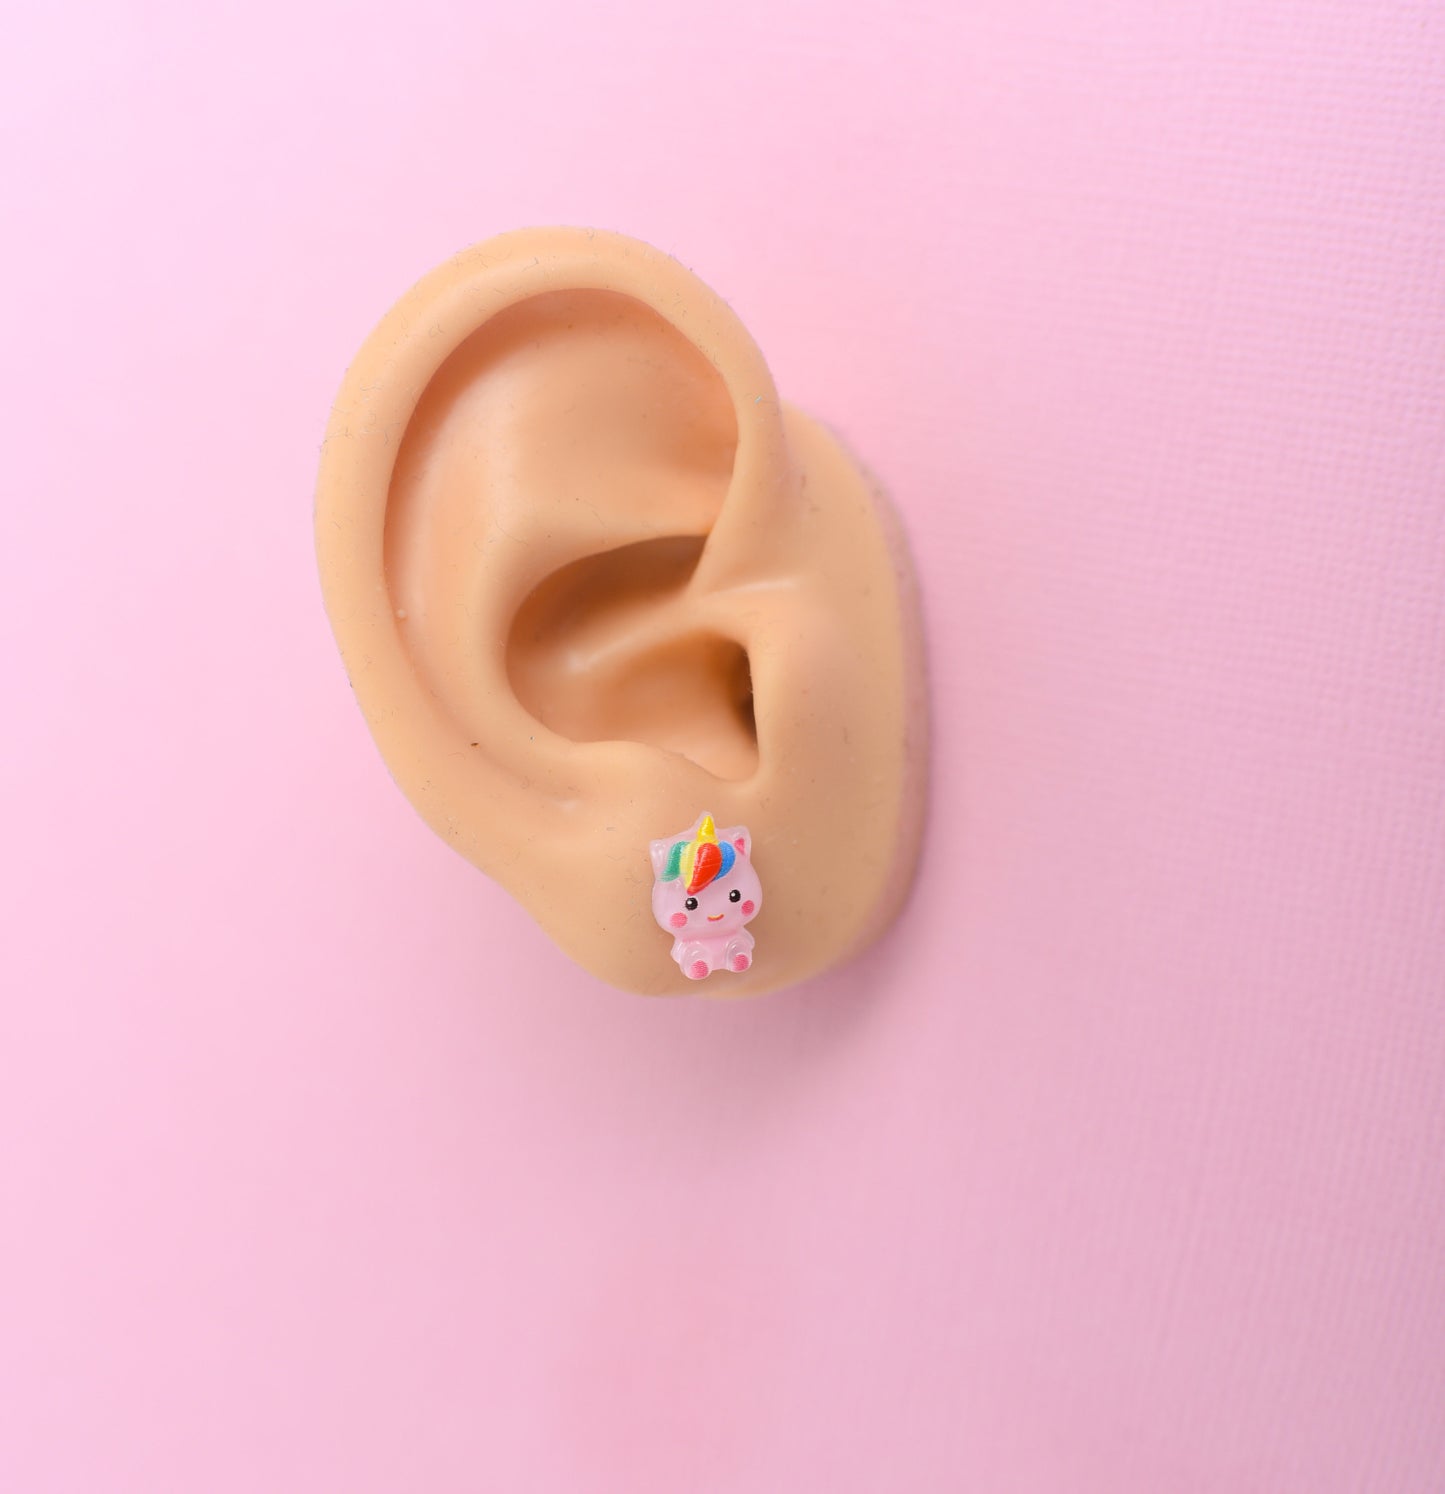 Mini Pink Unicorn Rainbow Earring Set with Titanium Posts